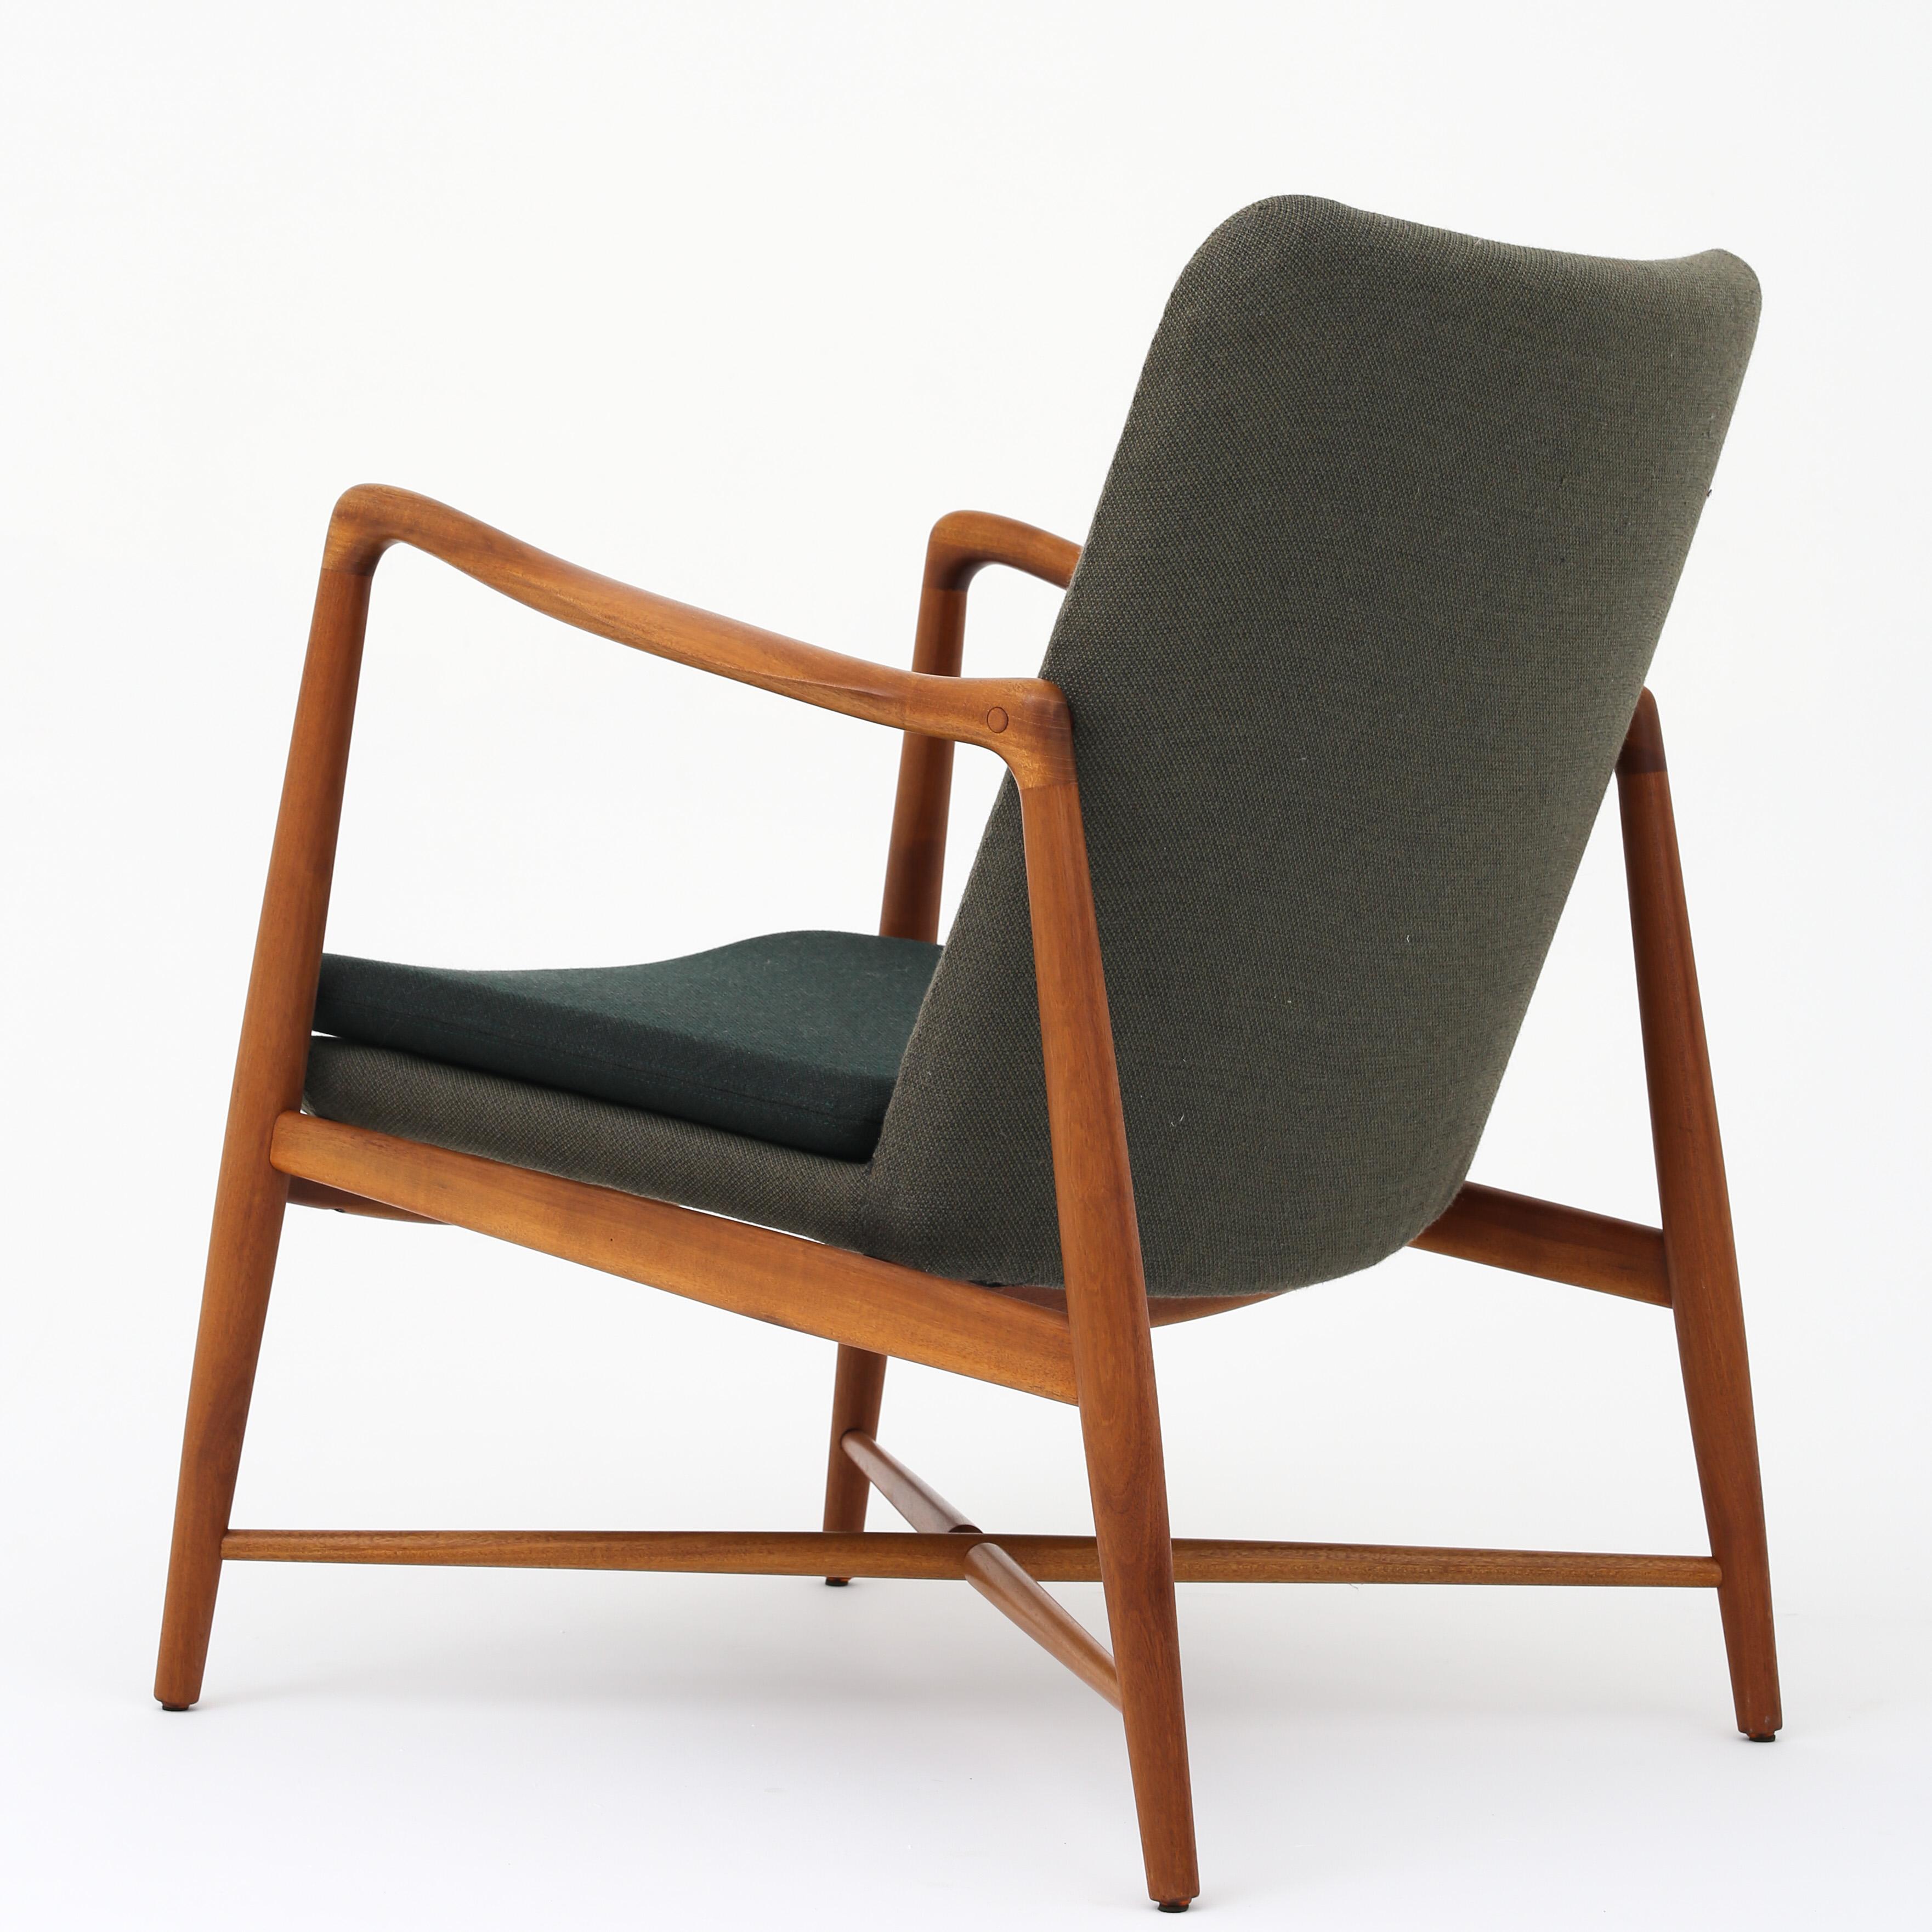 Finn Juhl BO 59 - Fireplace chair with frame in mahogany. Upholstered with Fiord 961/991. Designed in 1946. Maker Bovirke.